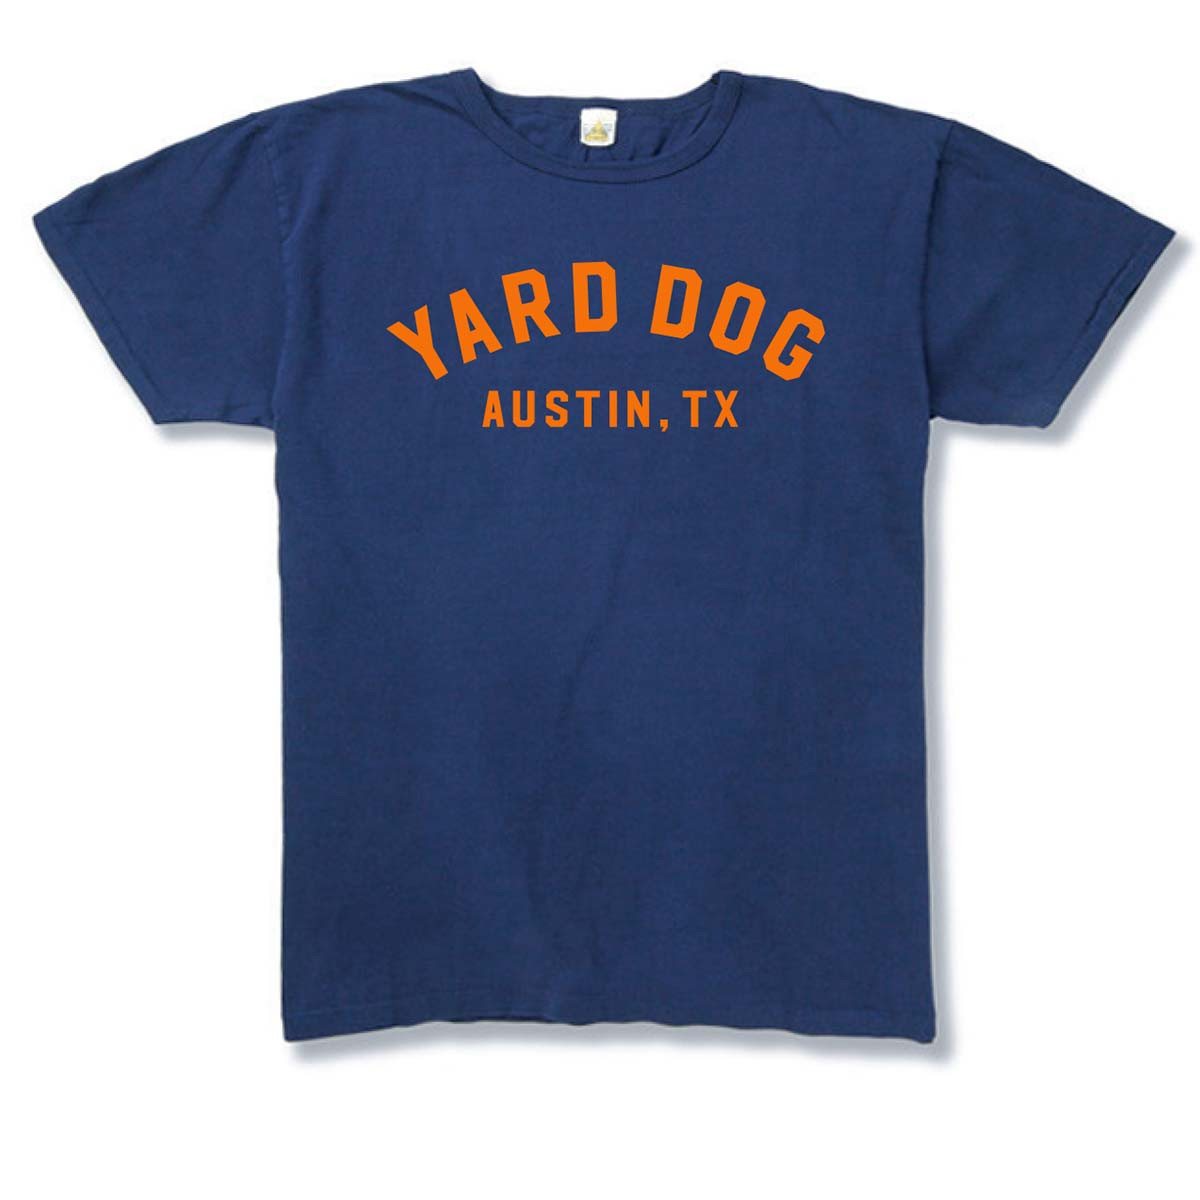 Yard Dog Austin TX Tee Shirt - Navy Yard Dog